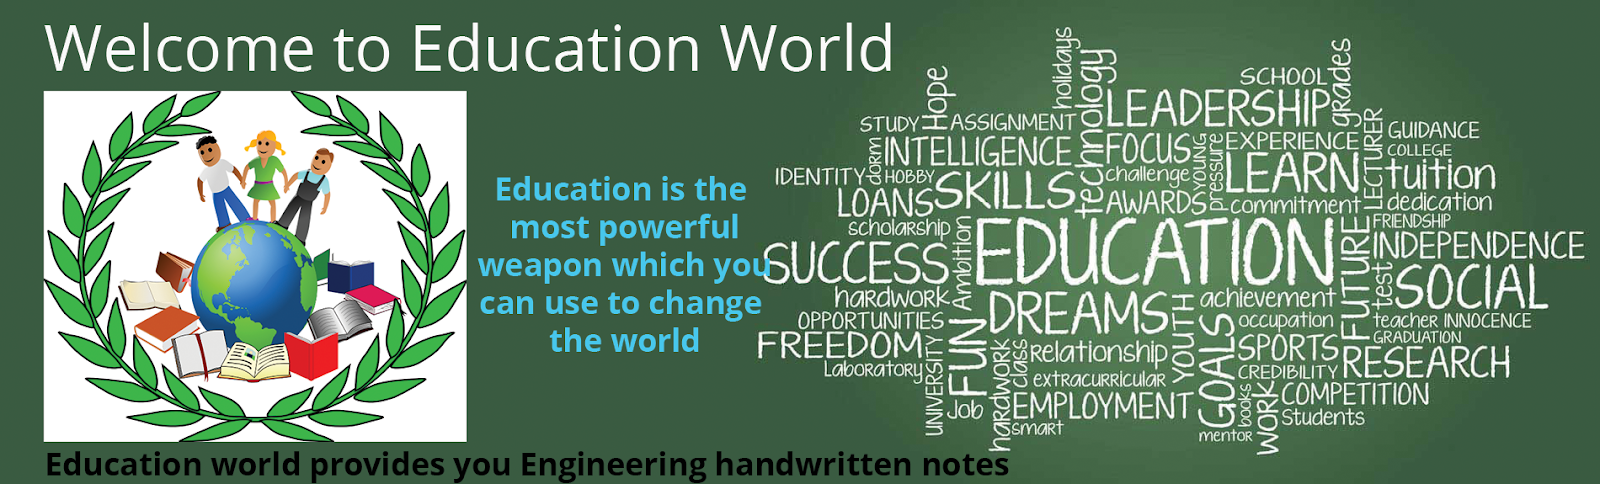 Education world